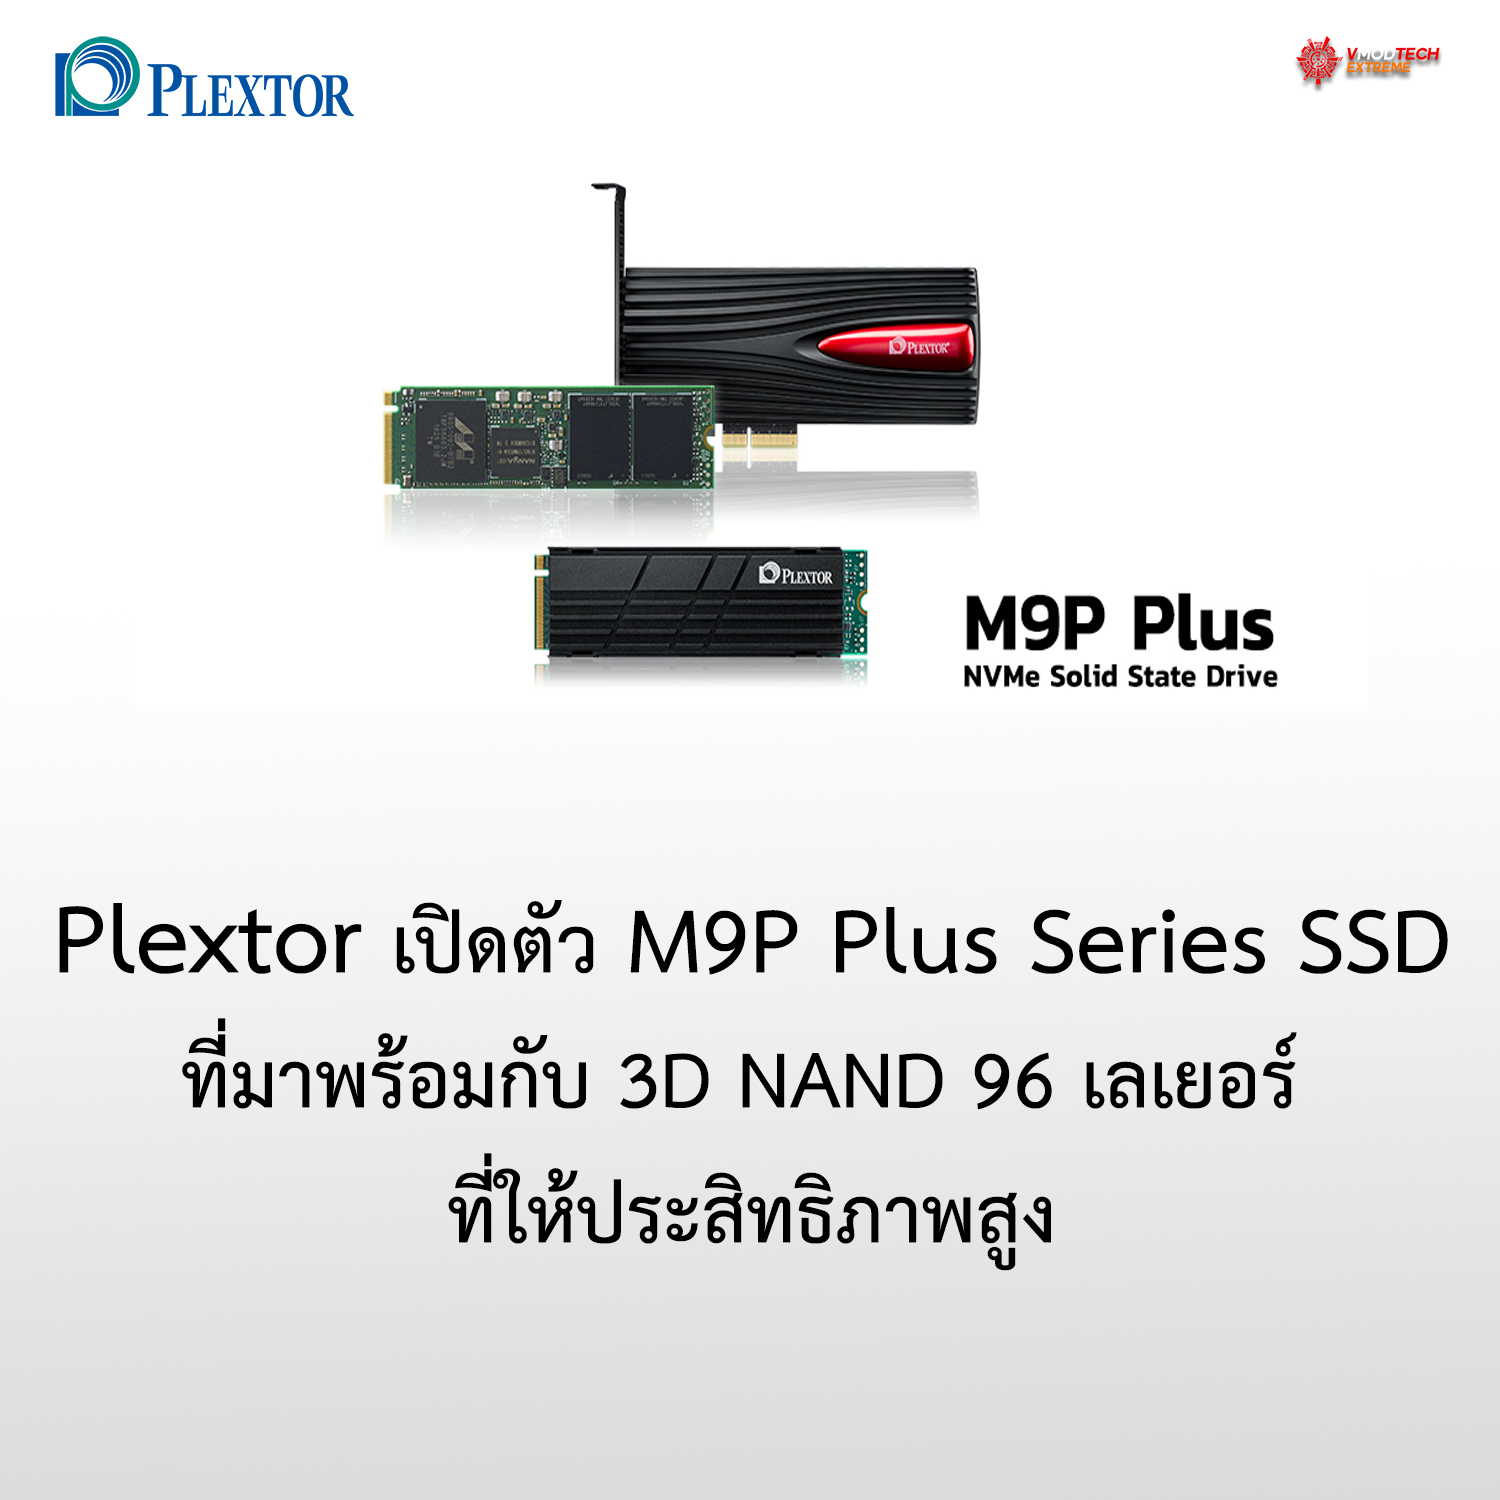 plextor m9p plus ssd Plextor เปิดตัว M9P Plus Series SSD ที่มาพร้อมกับ 3D NAND 96 เลเยอร์ ที่ให้ประสิทธิภาพสูง